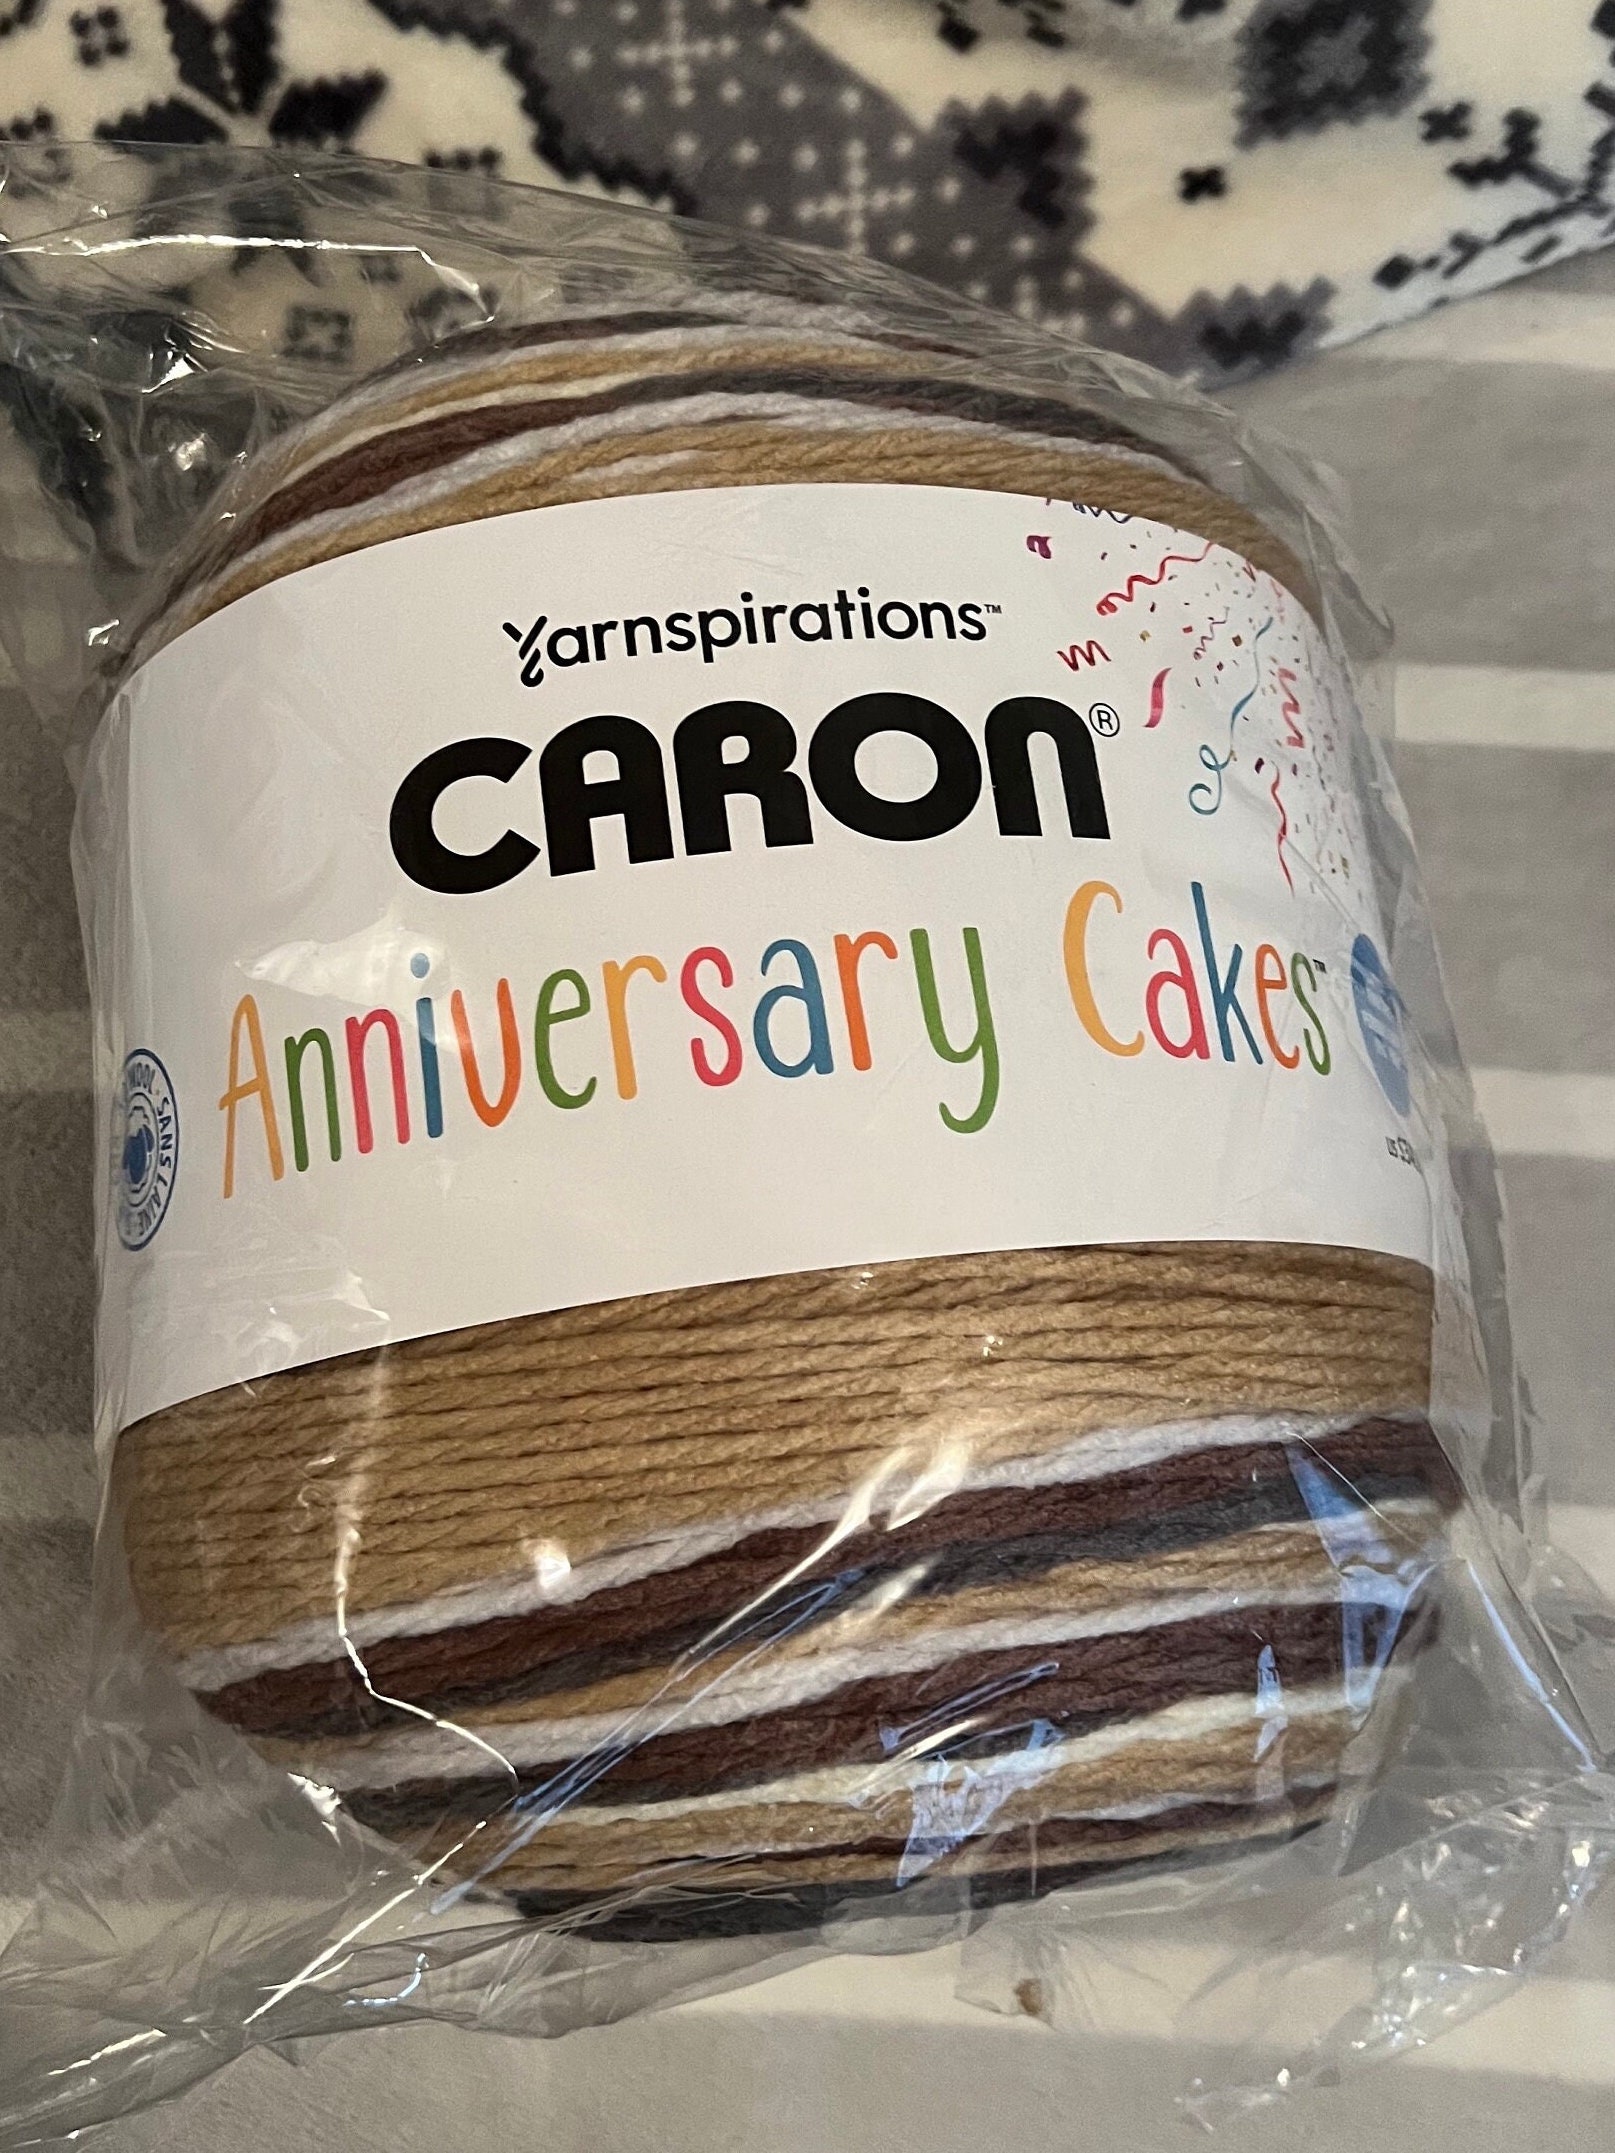 Caron Anniversary Cakes - Sandy Shore